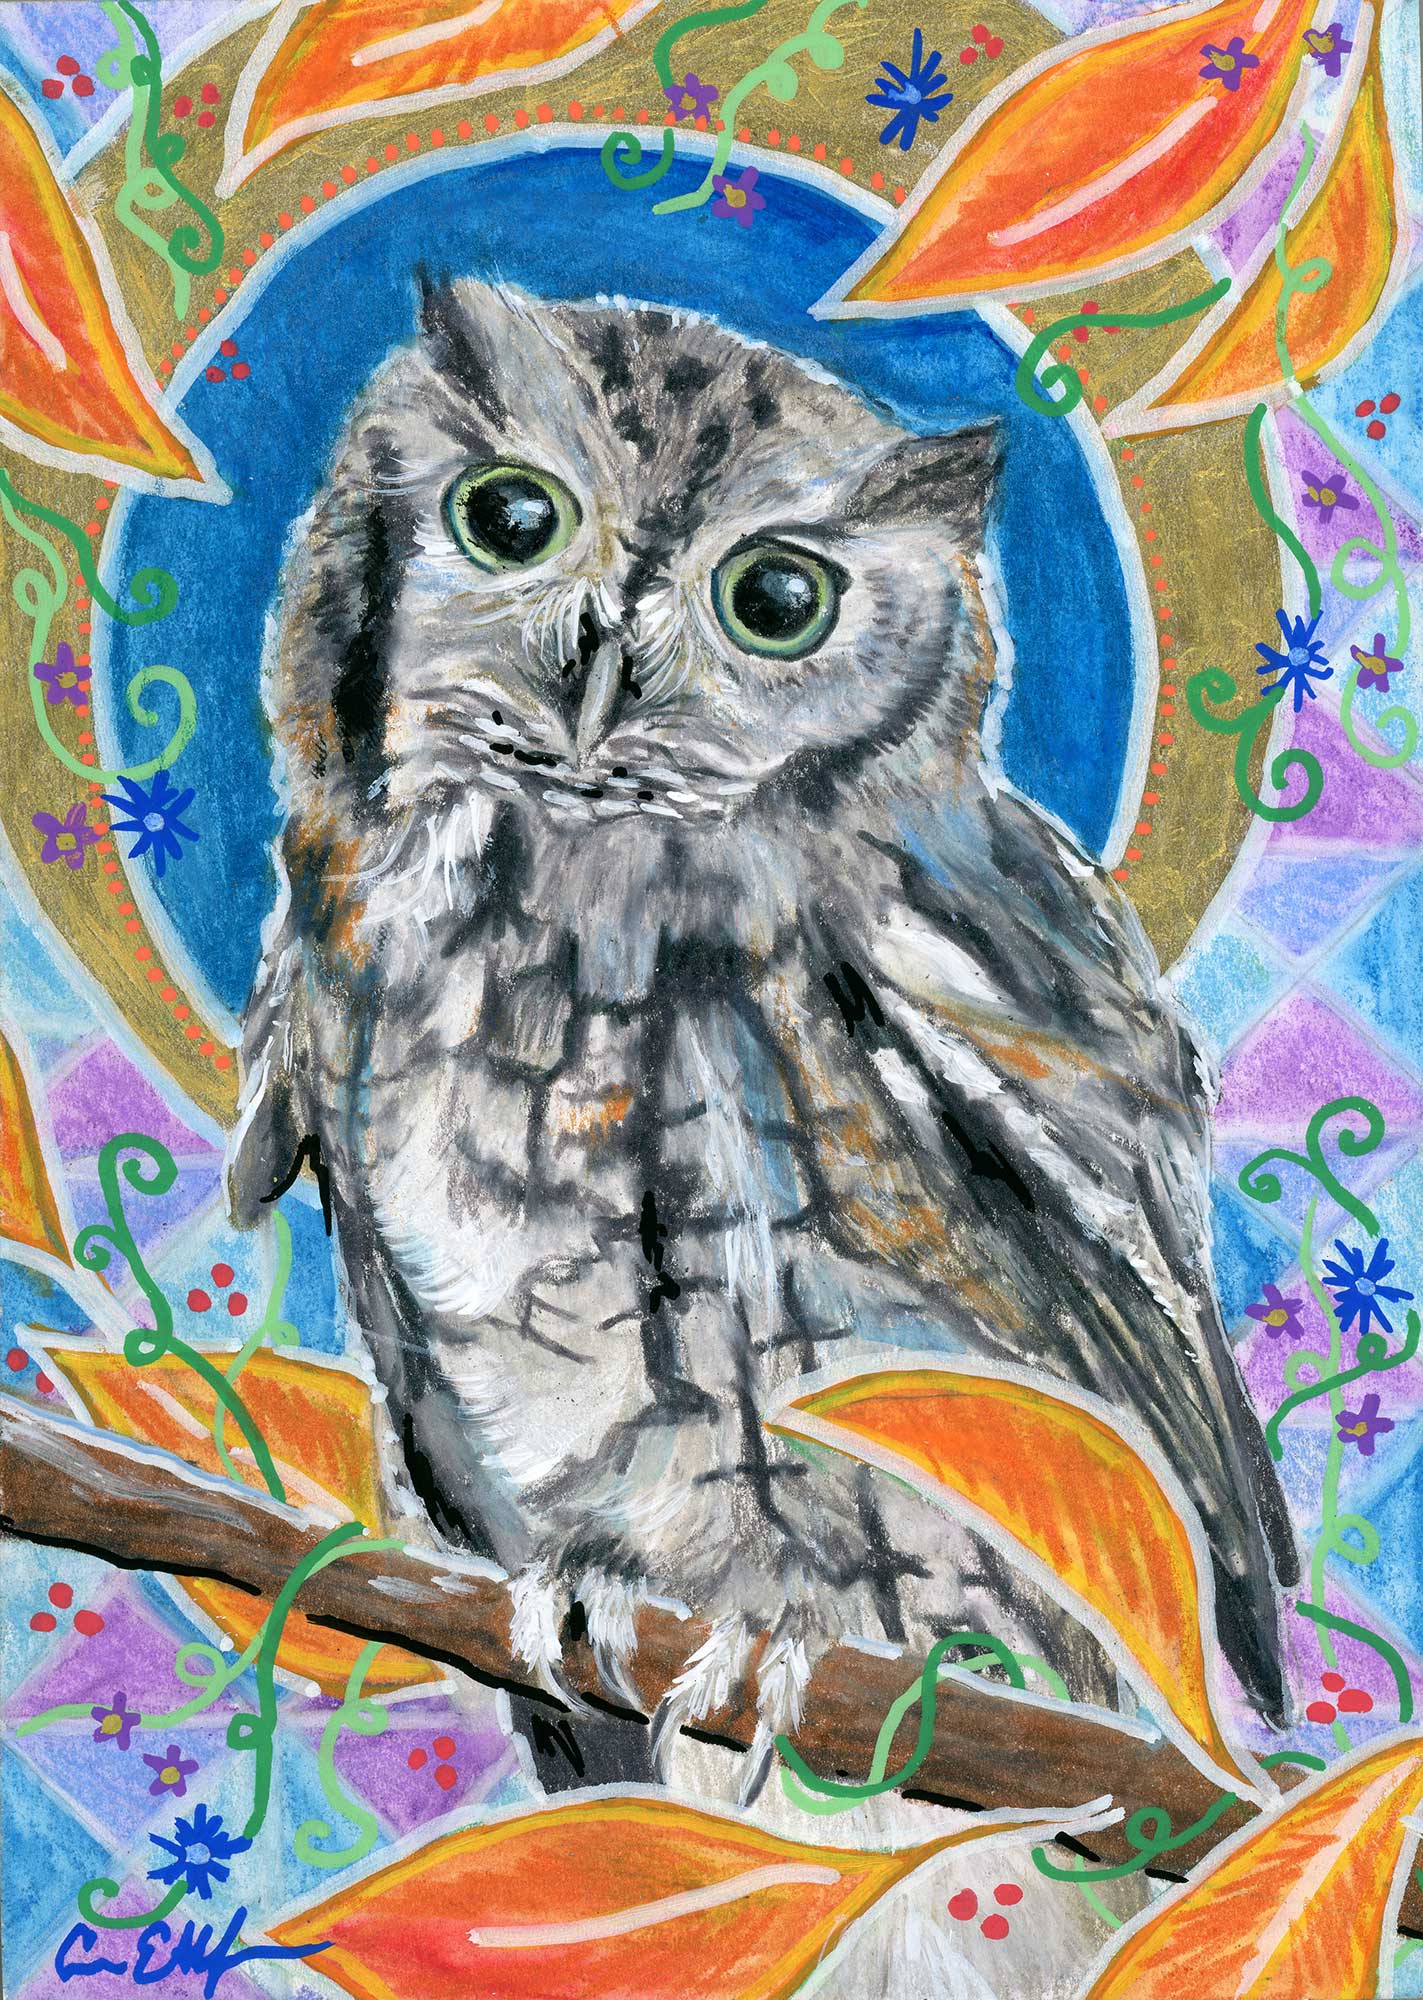 SOLD - "Autumn Screech Owl", 5" x 7", mixed media